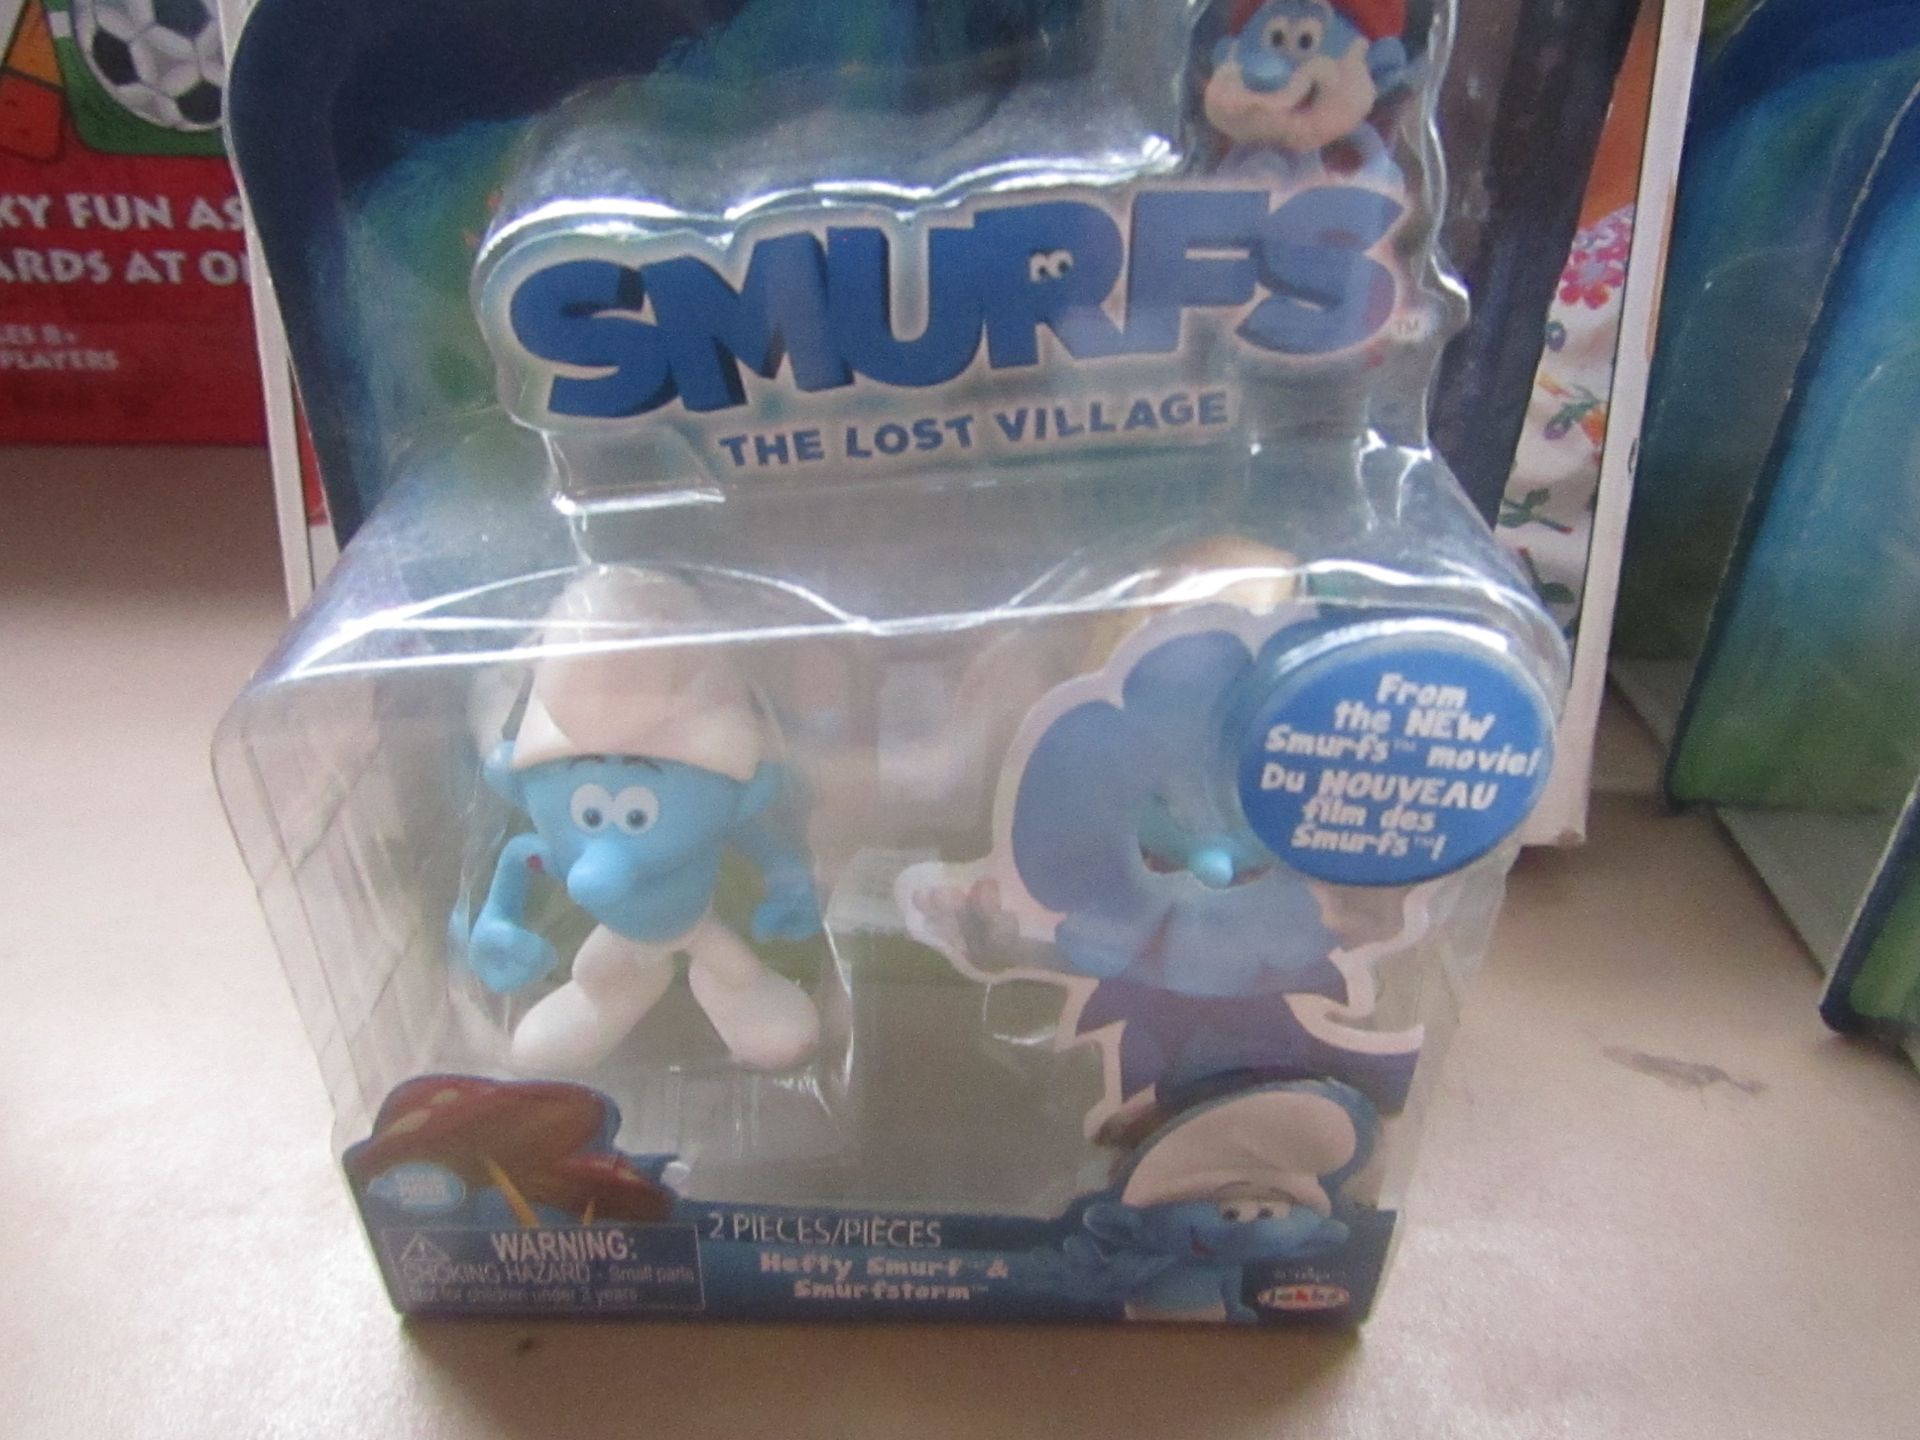 2x Smurfs - The Lost Village Figures - Unused & Packaged.